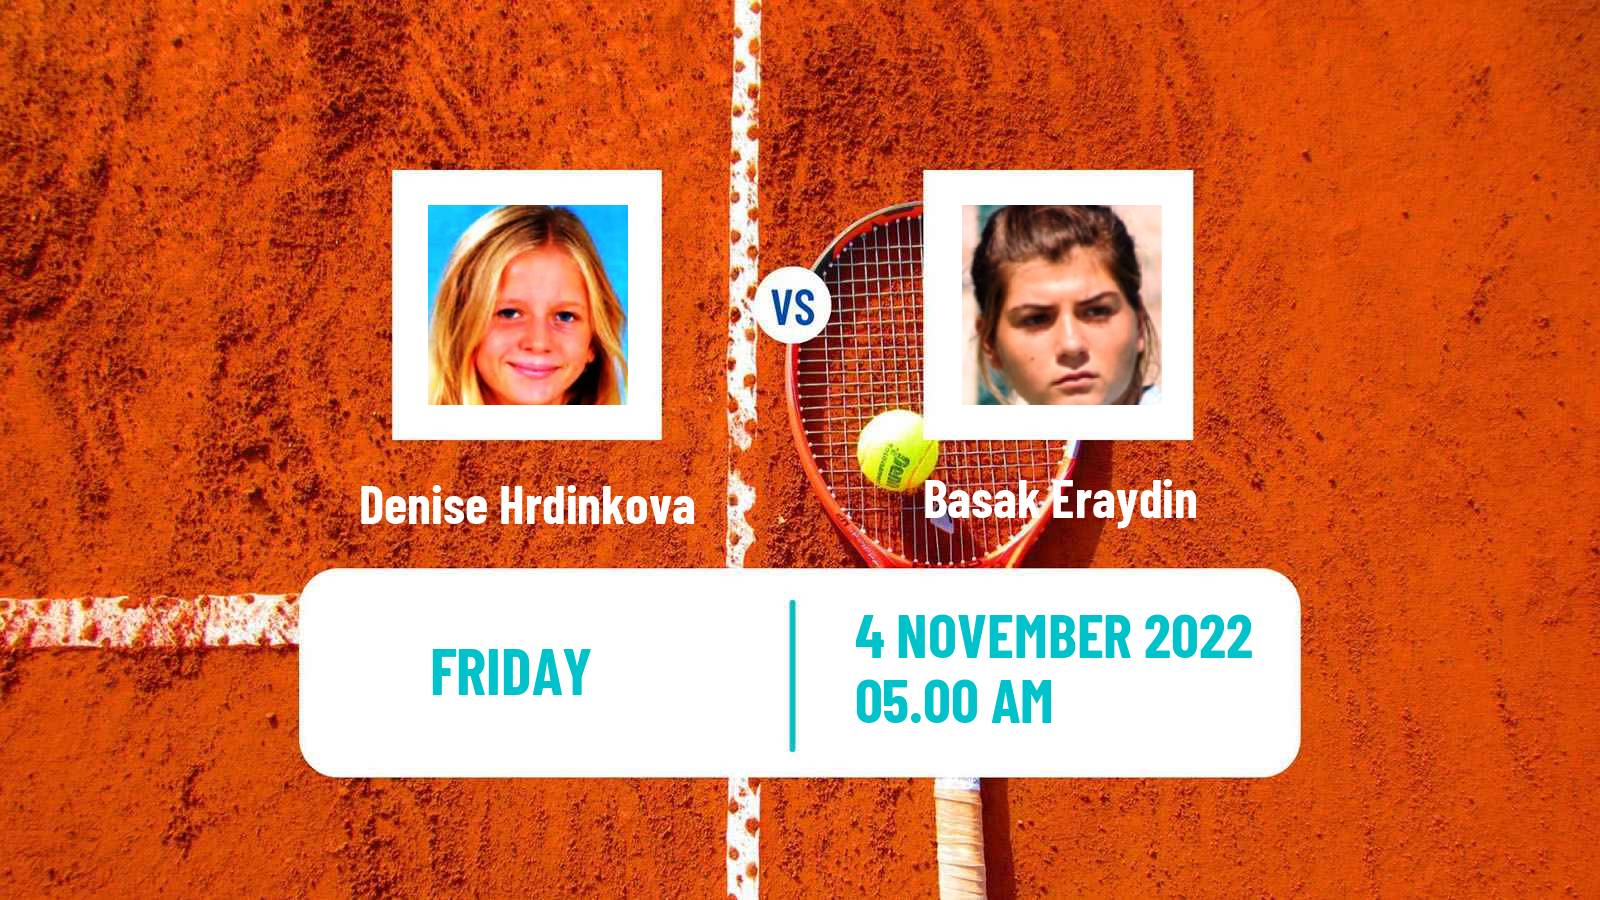 Tennis ITF Tournaments Denise Hrdinkova - Basak Eraydin